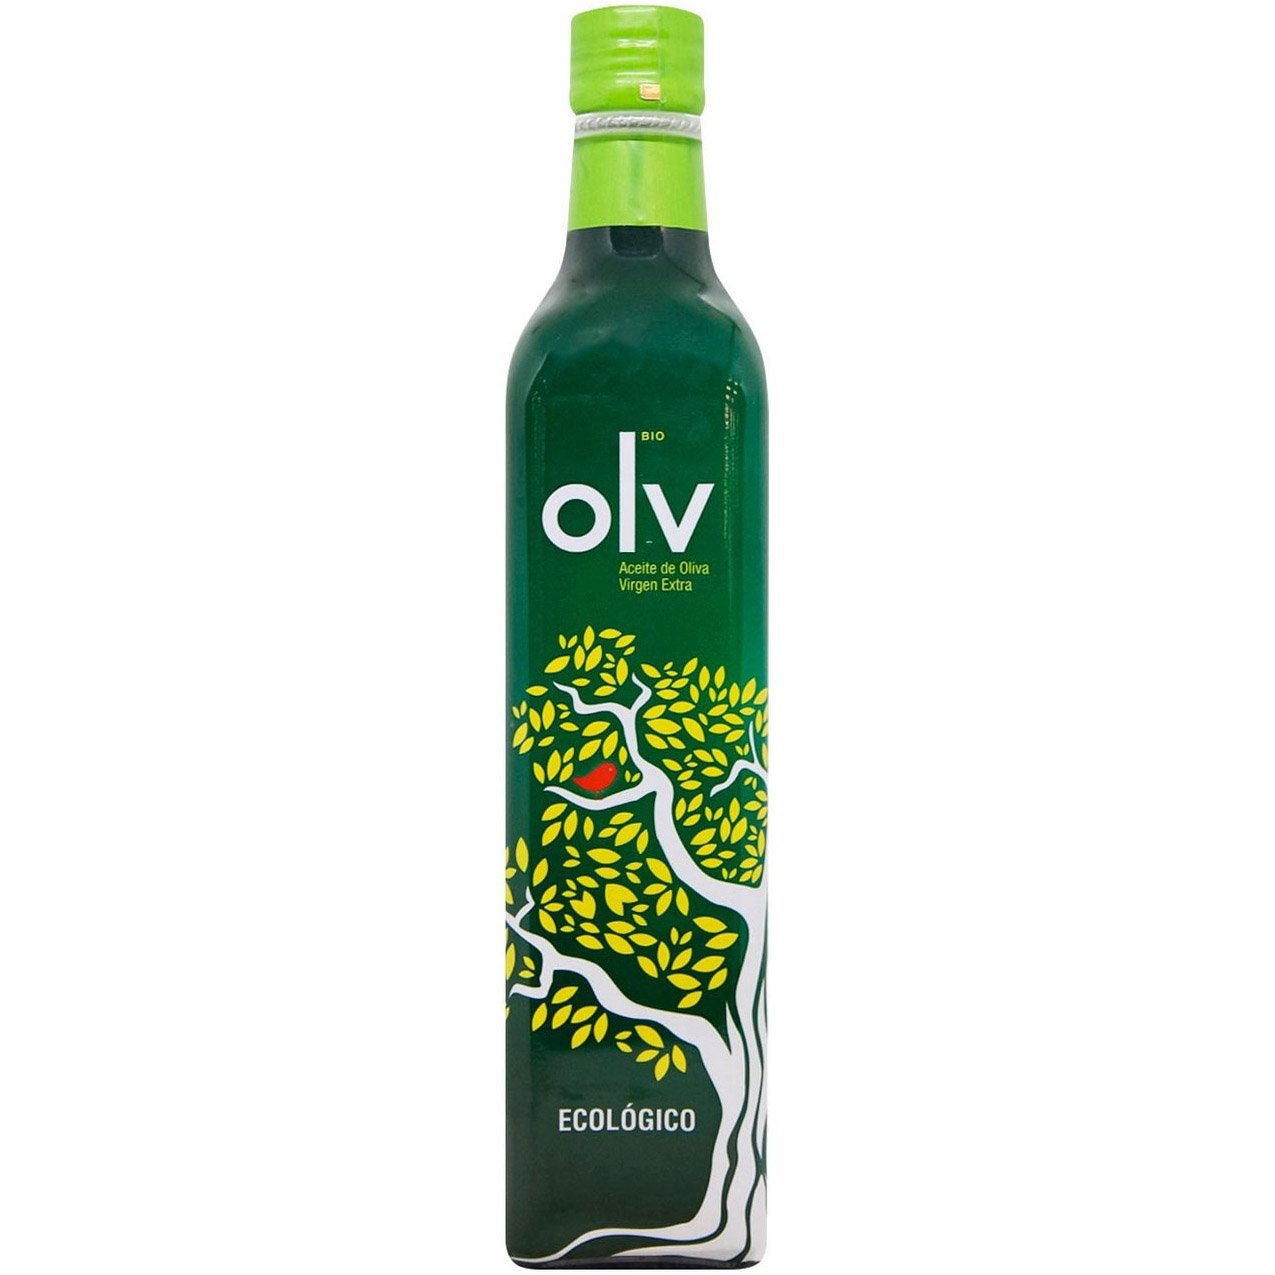 Олія оливкова Aesa Bio Olv Virgen Extra Organic 0.5 л - фото 1